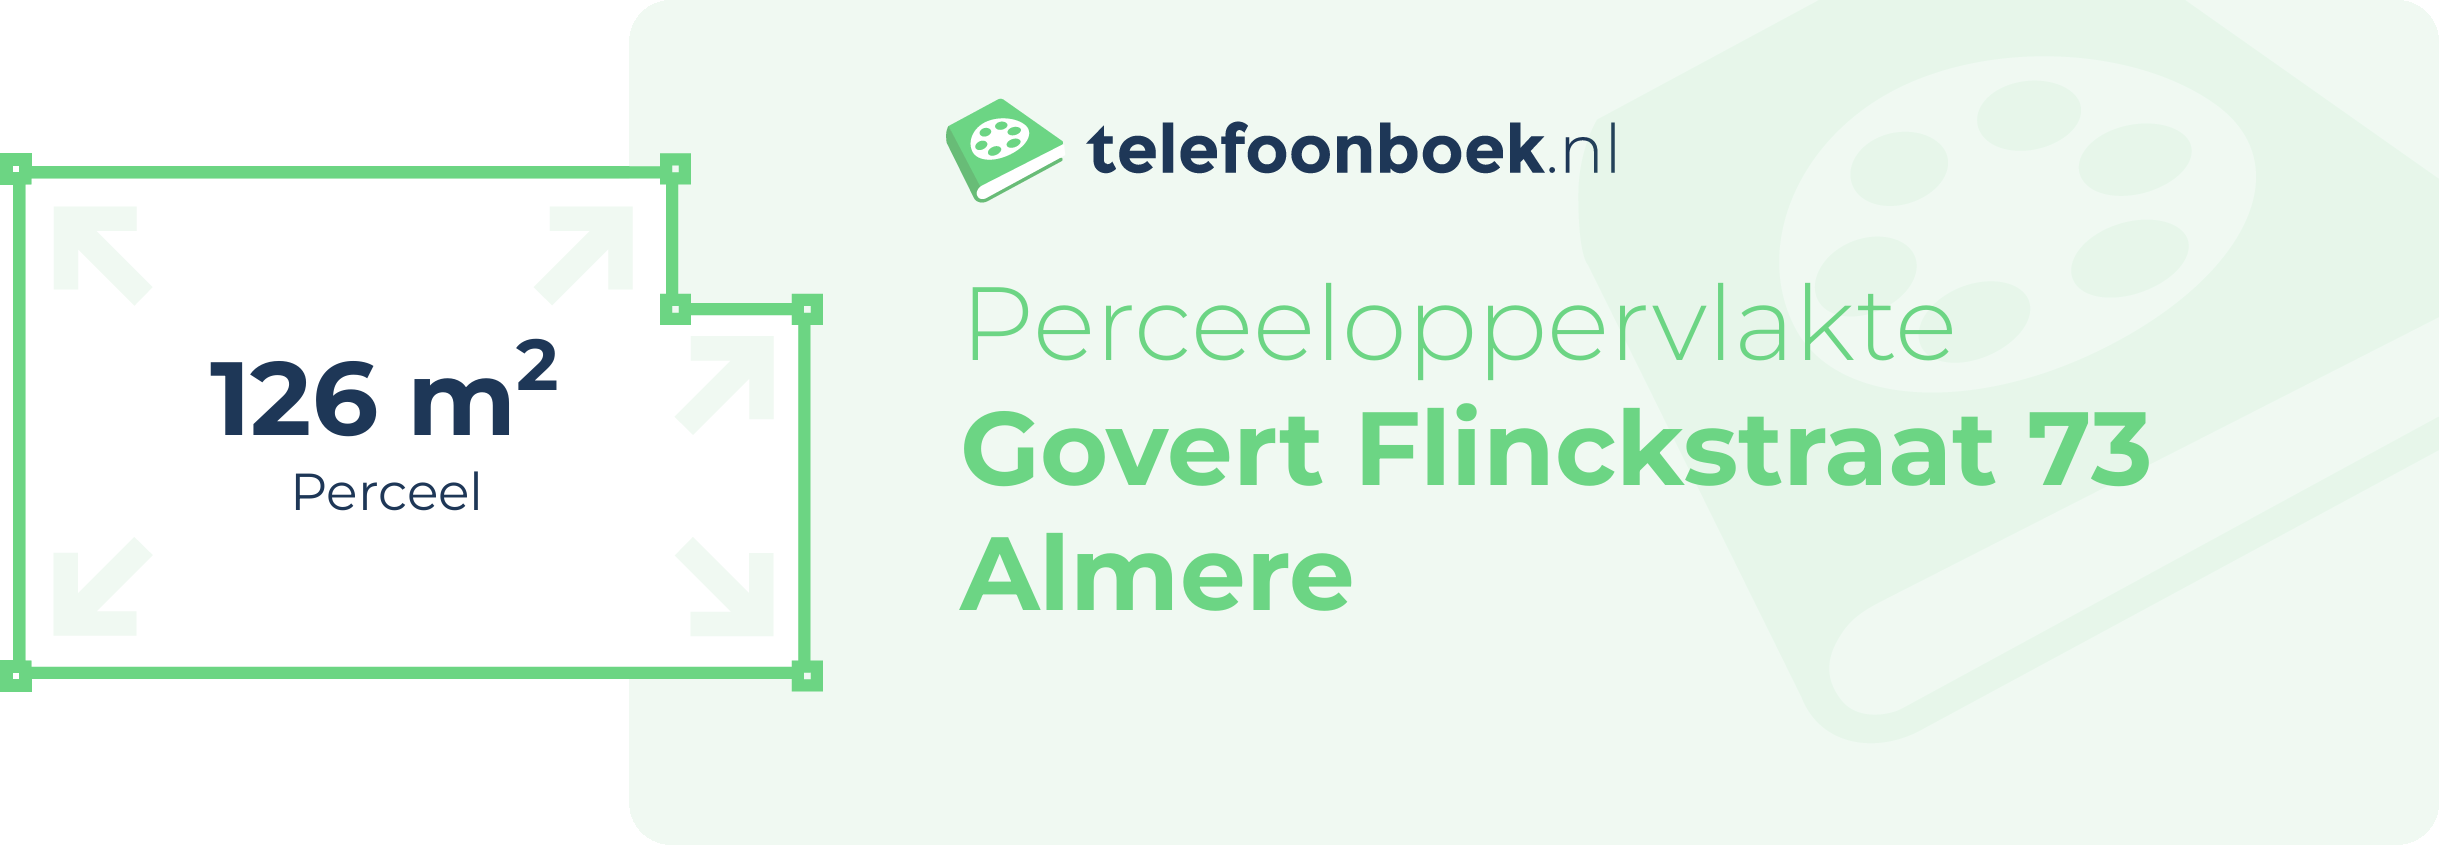 Perceeloppervlakte Govert Flinckstraat 73 Almere